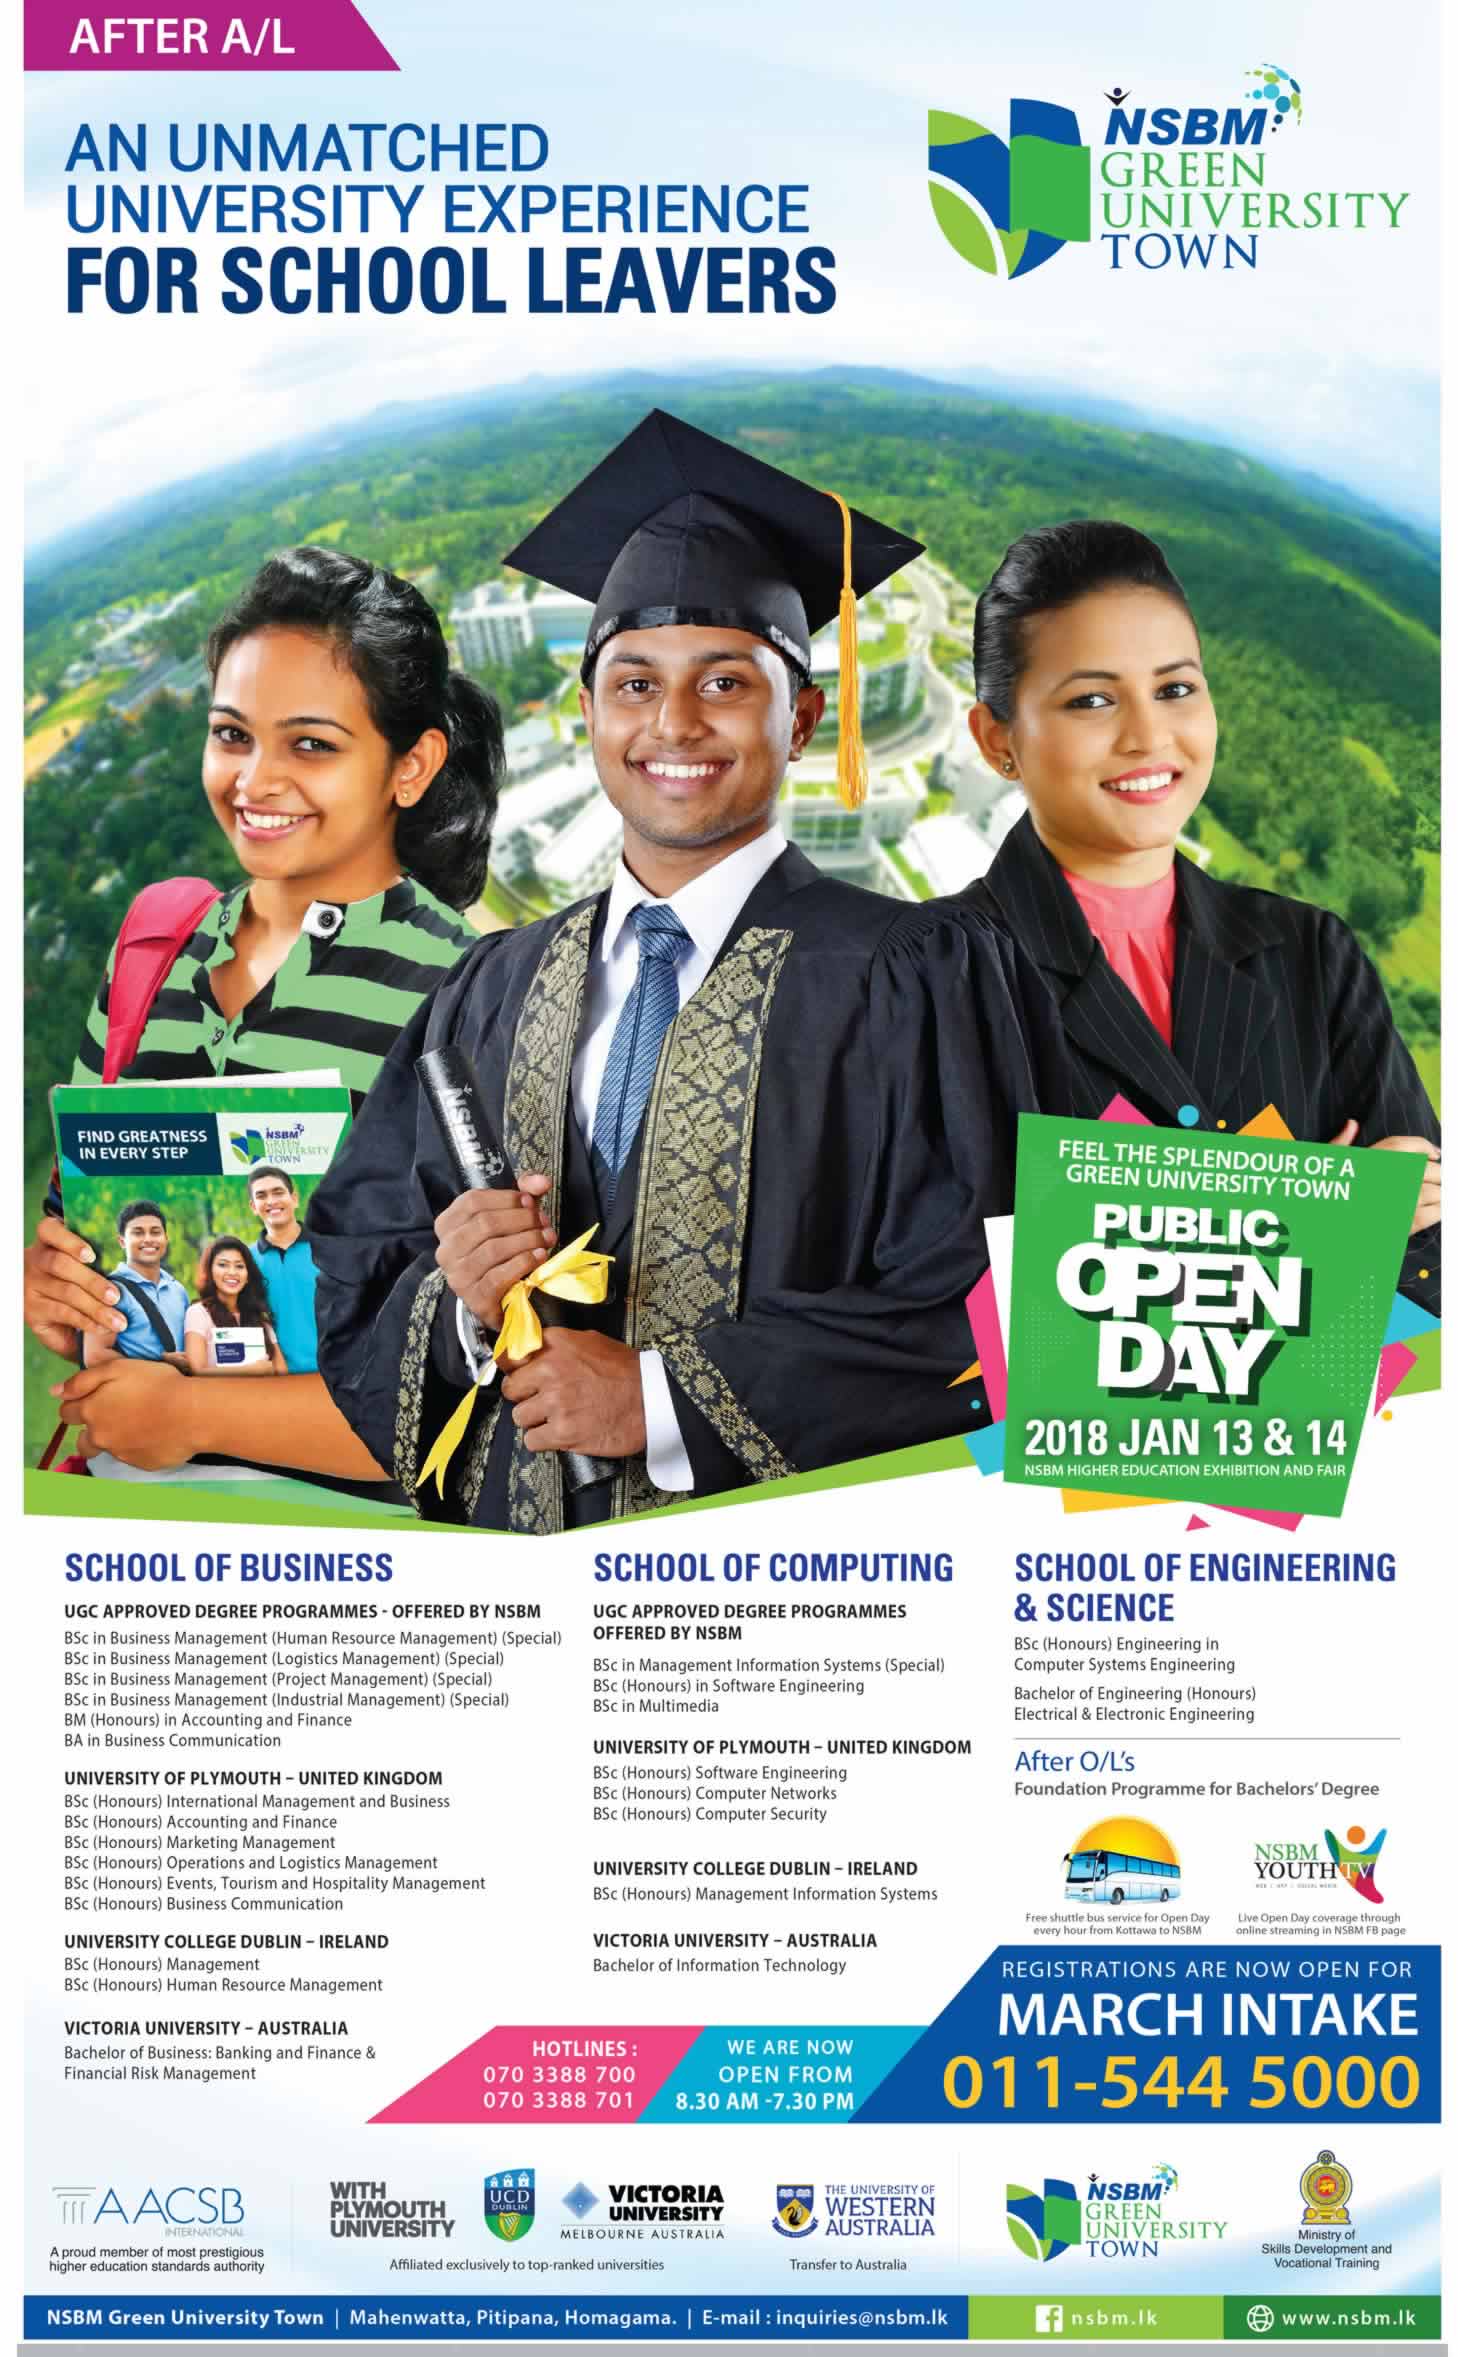 NSBM Green University Bachelor Degree – March Intakes